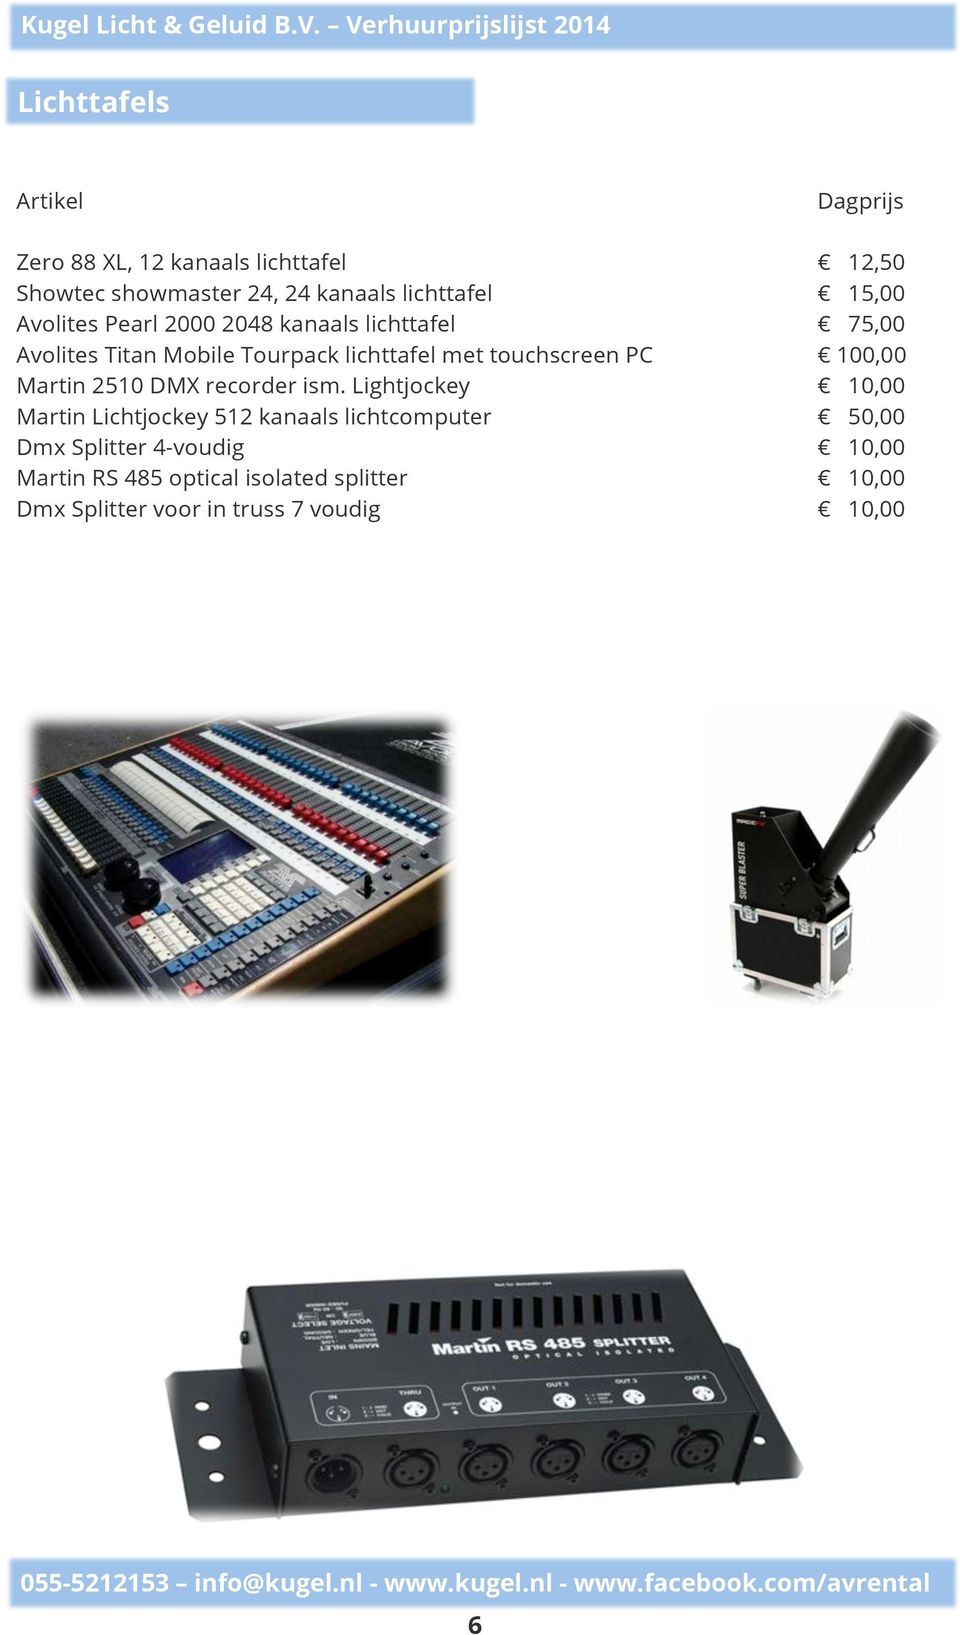 PC 100,00 Martin 2510 DMX recorder ism.